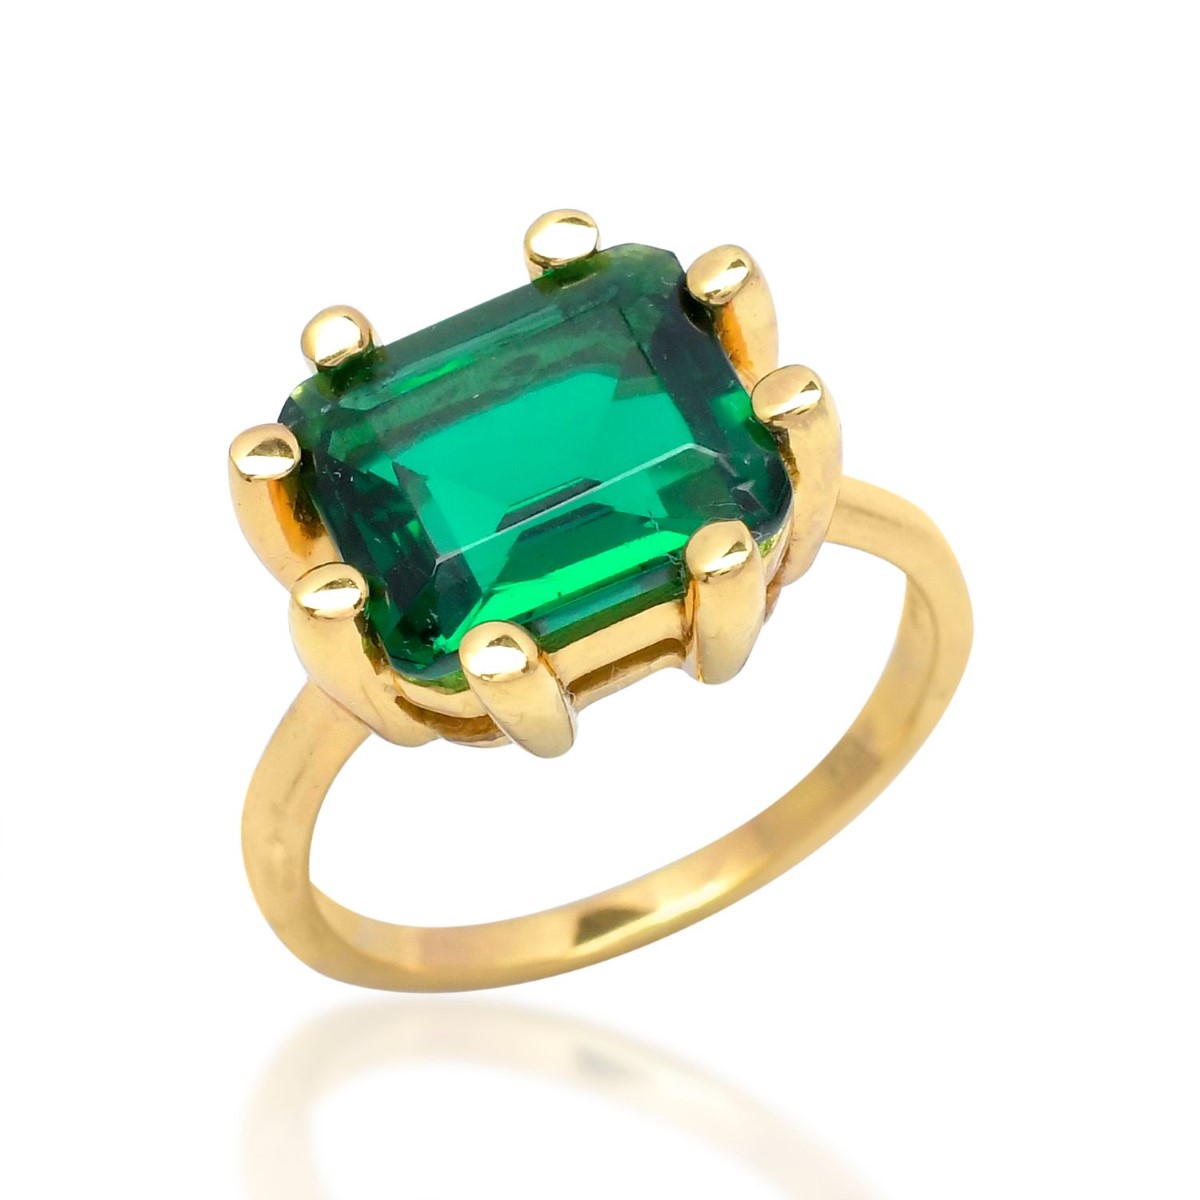 Shyla London Square Claw Ring - Emerald Green